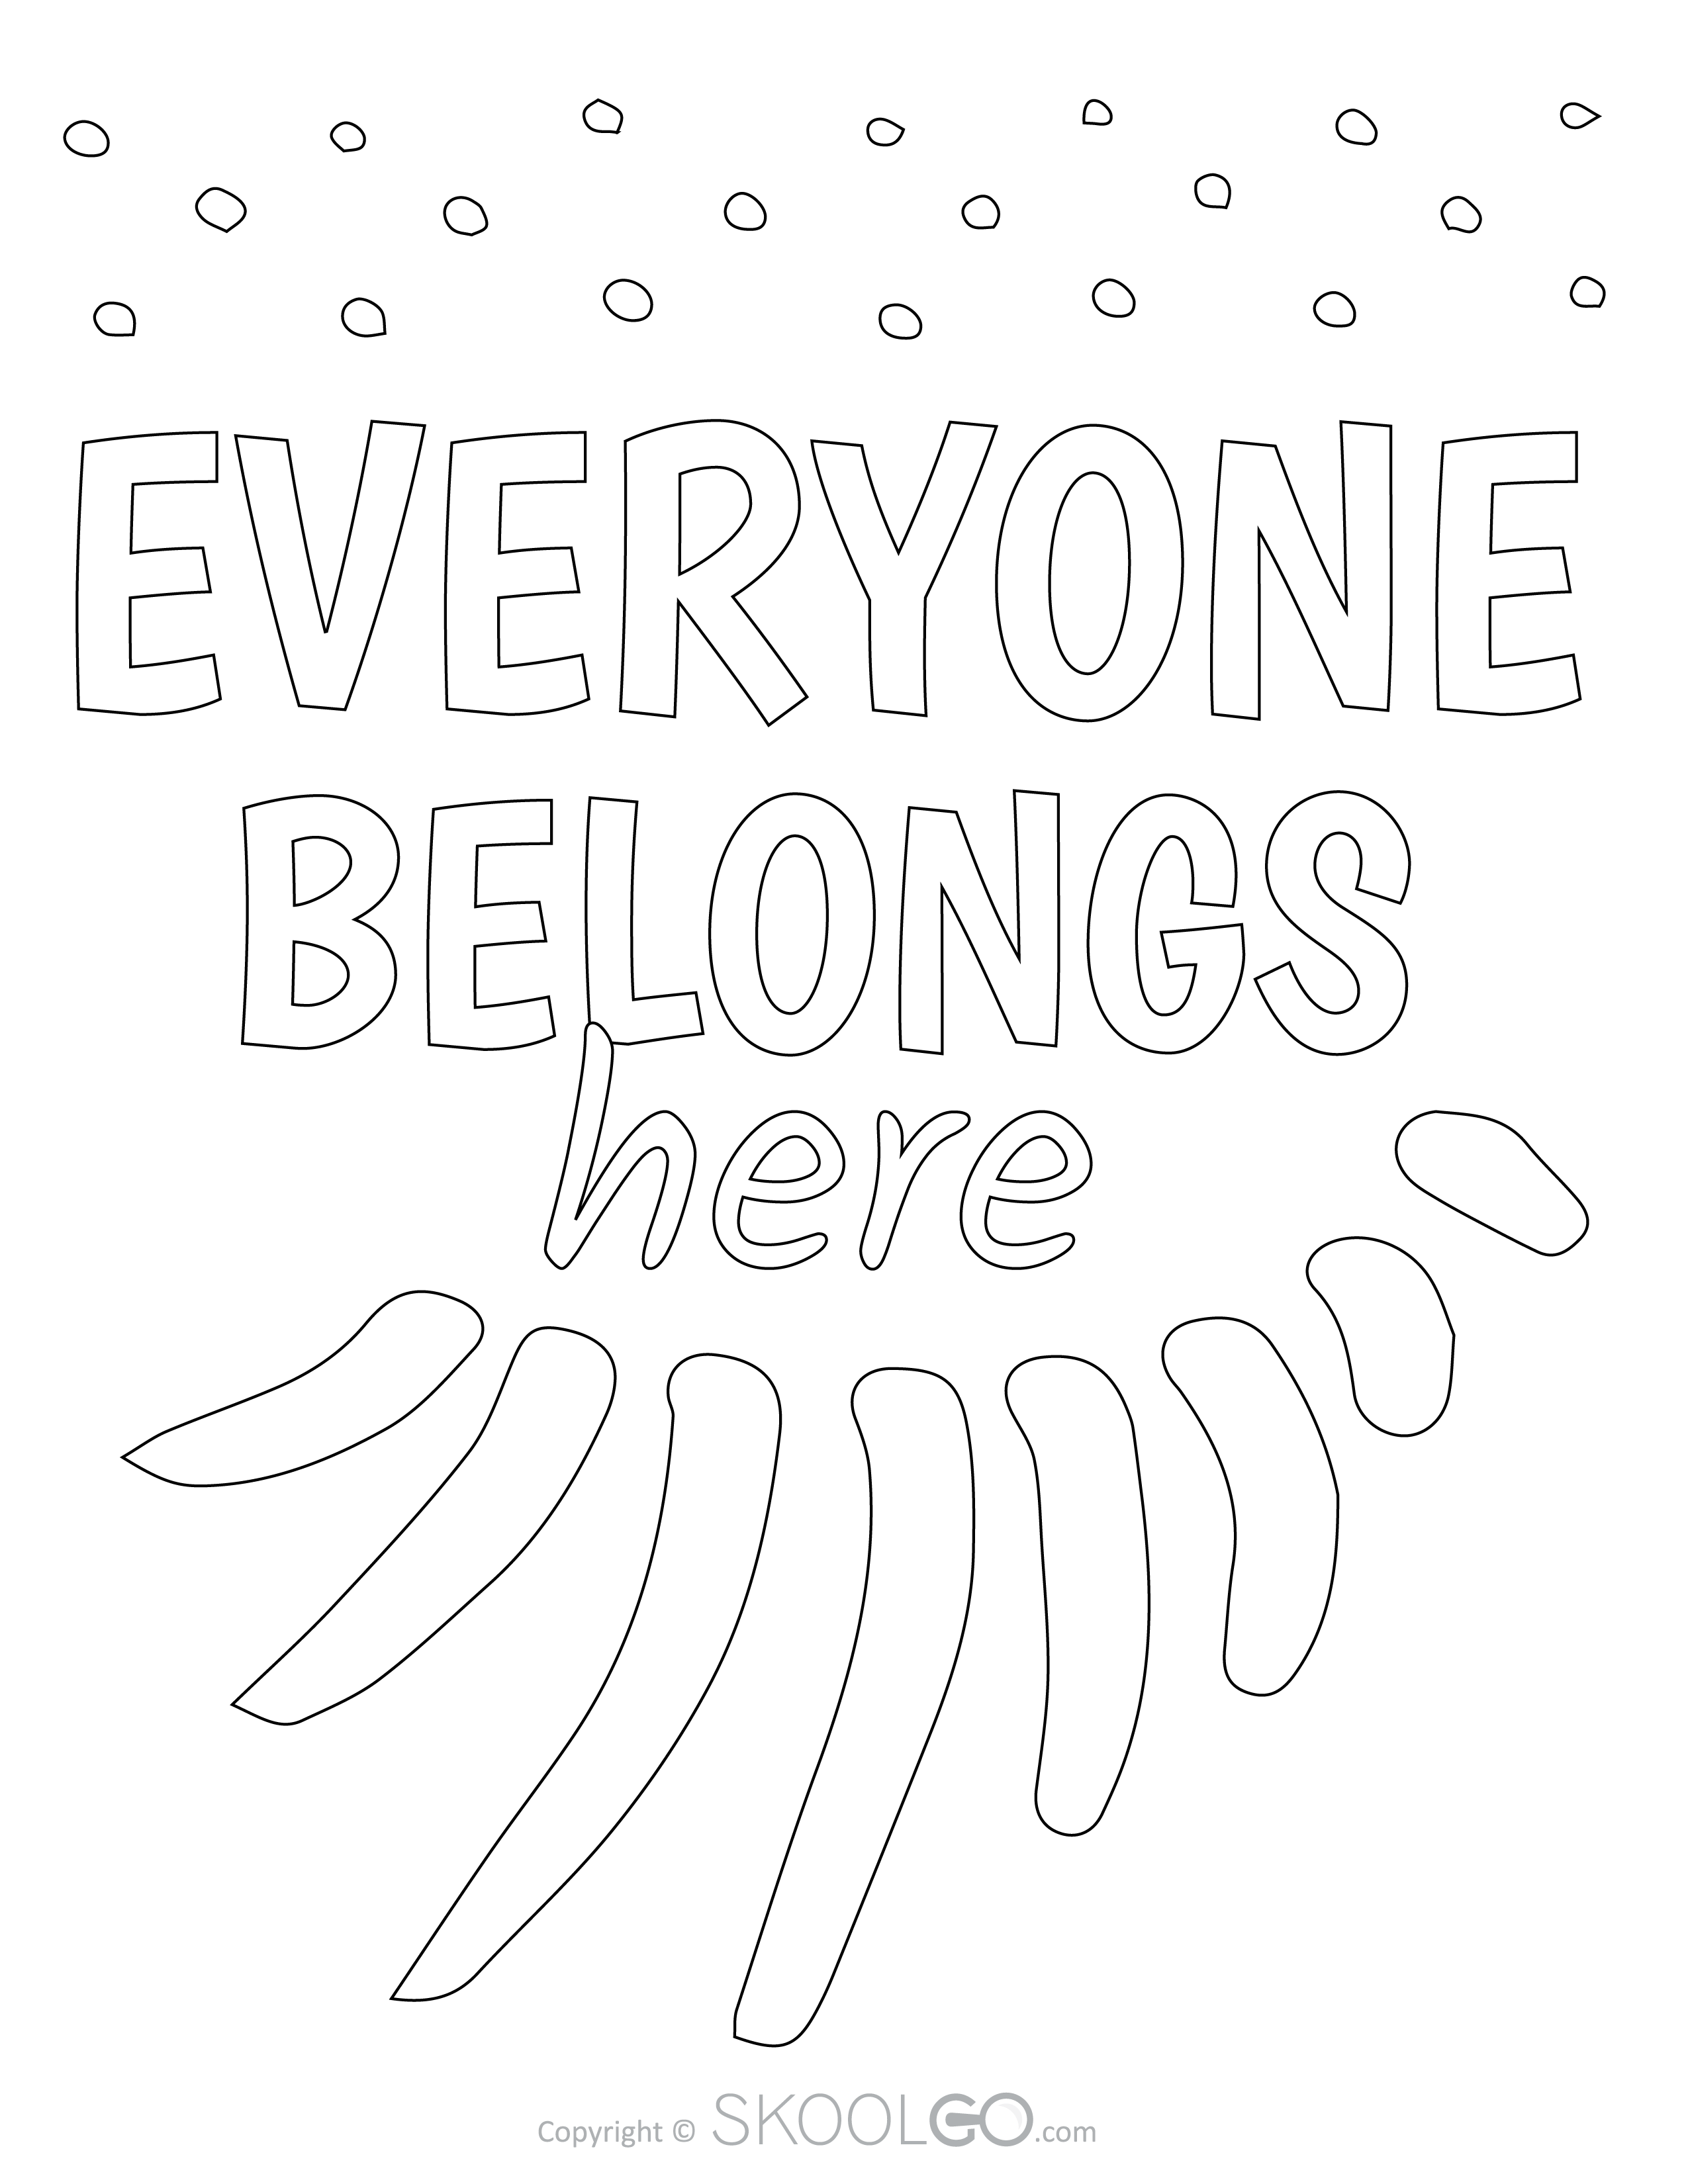 Everyone Belongs Here - Free Coloring Version Poster